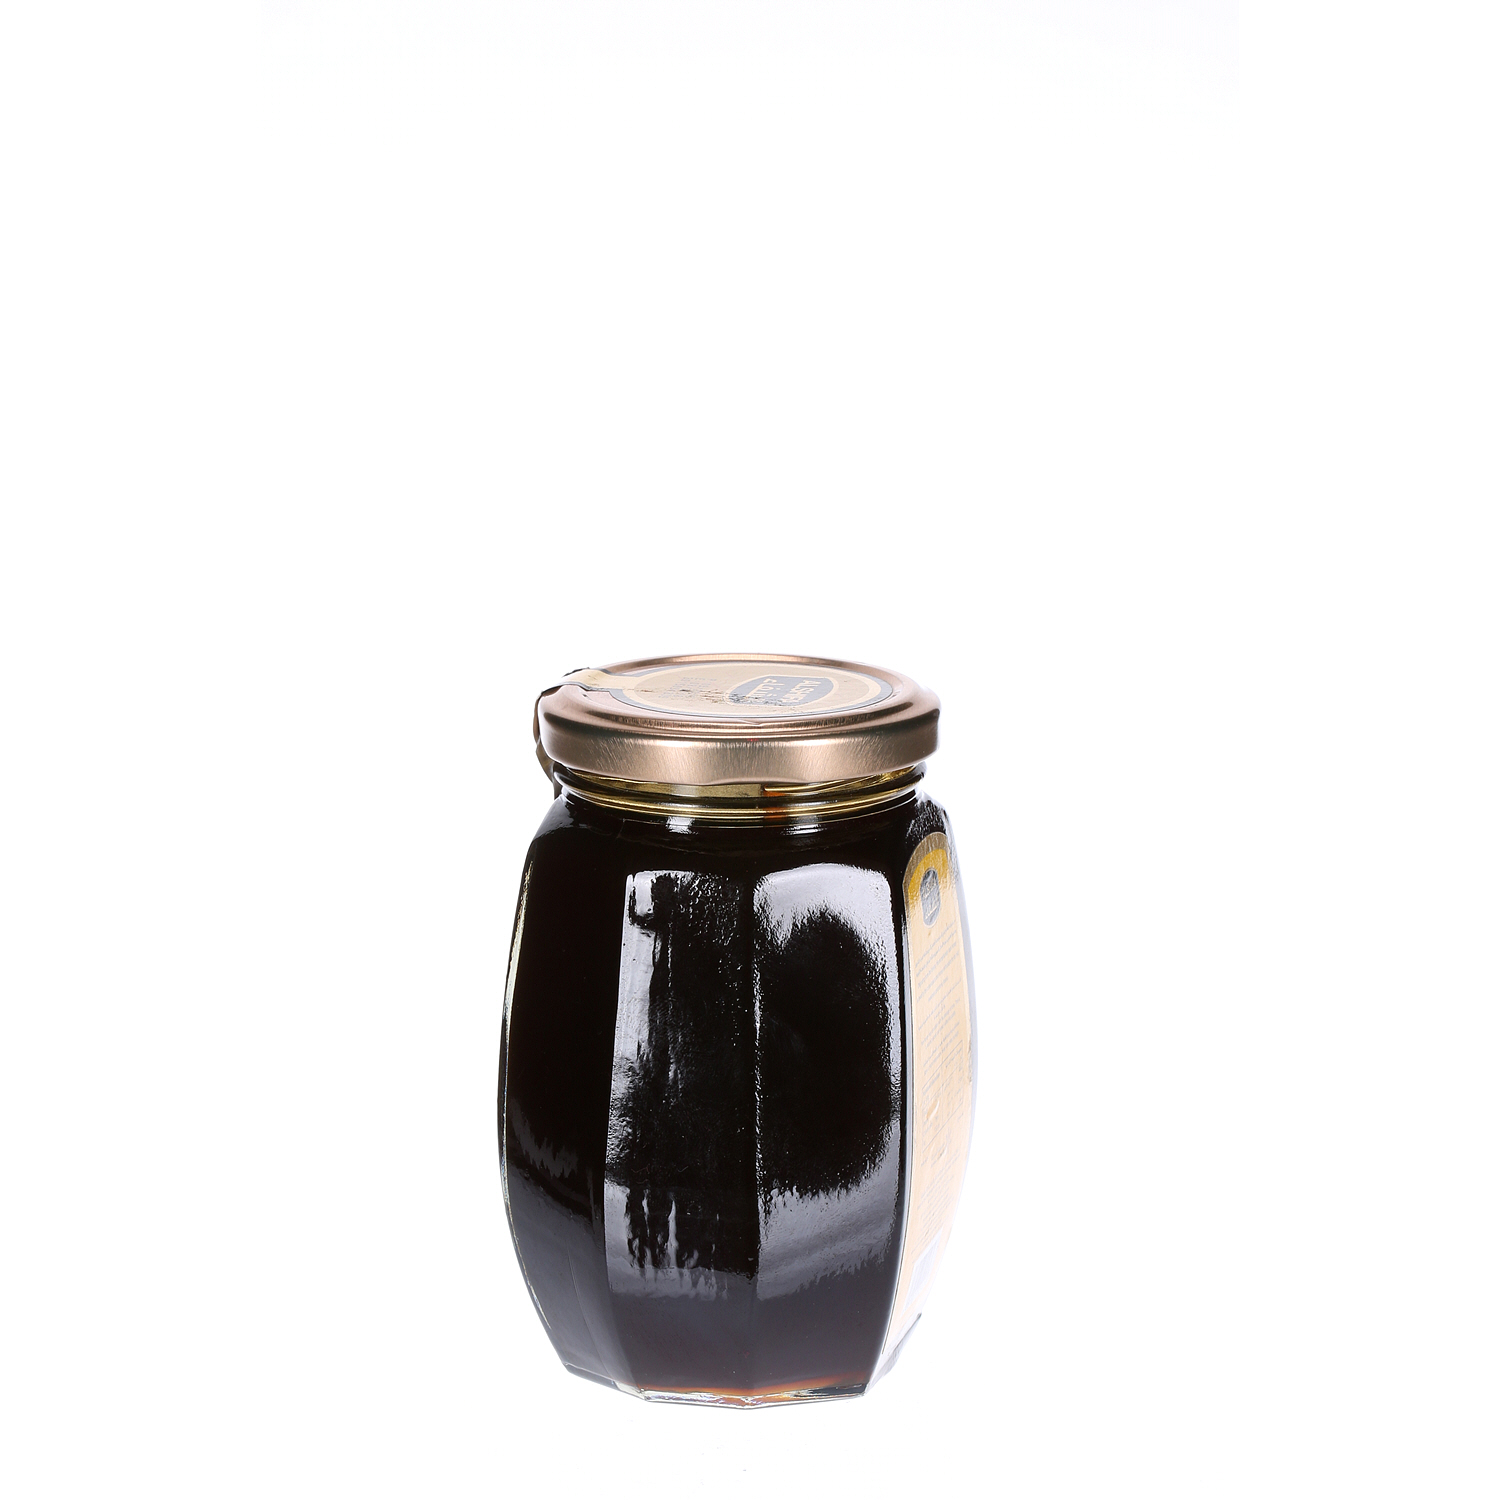 Al Shifa Black Forest Honey 500 g